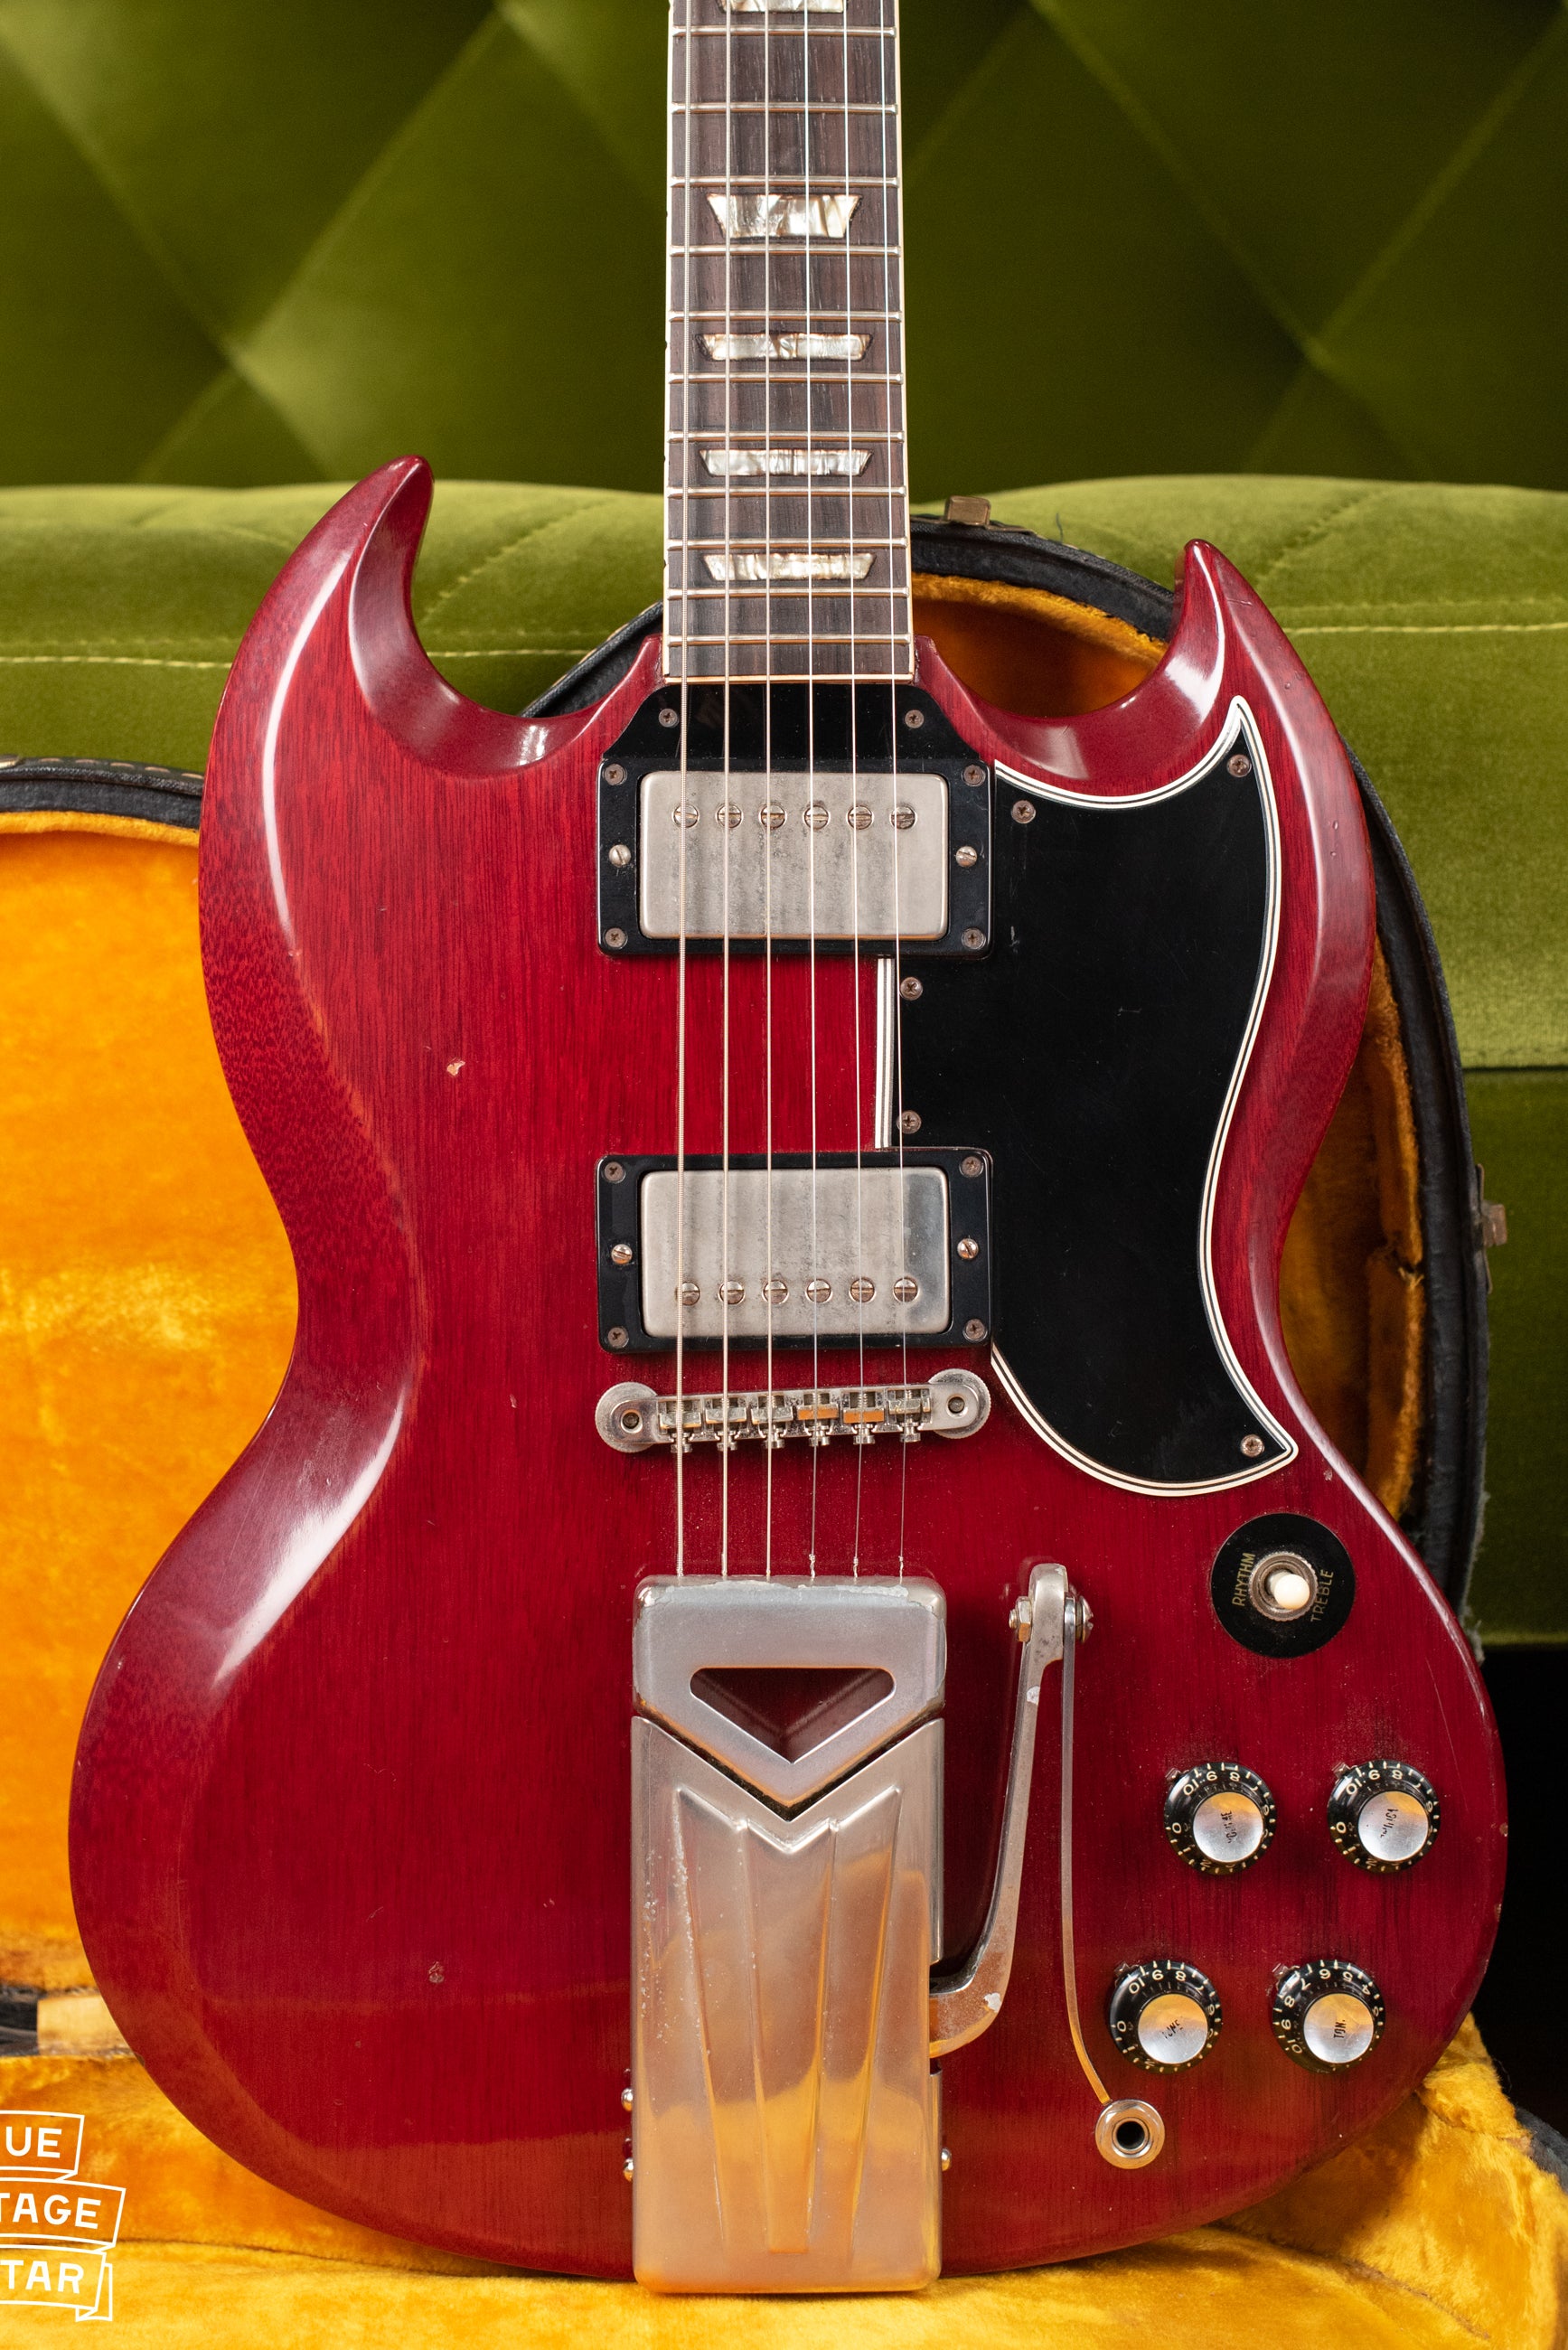 1960s Gibson SG electric guitar